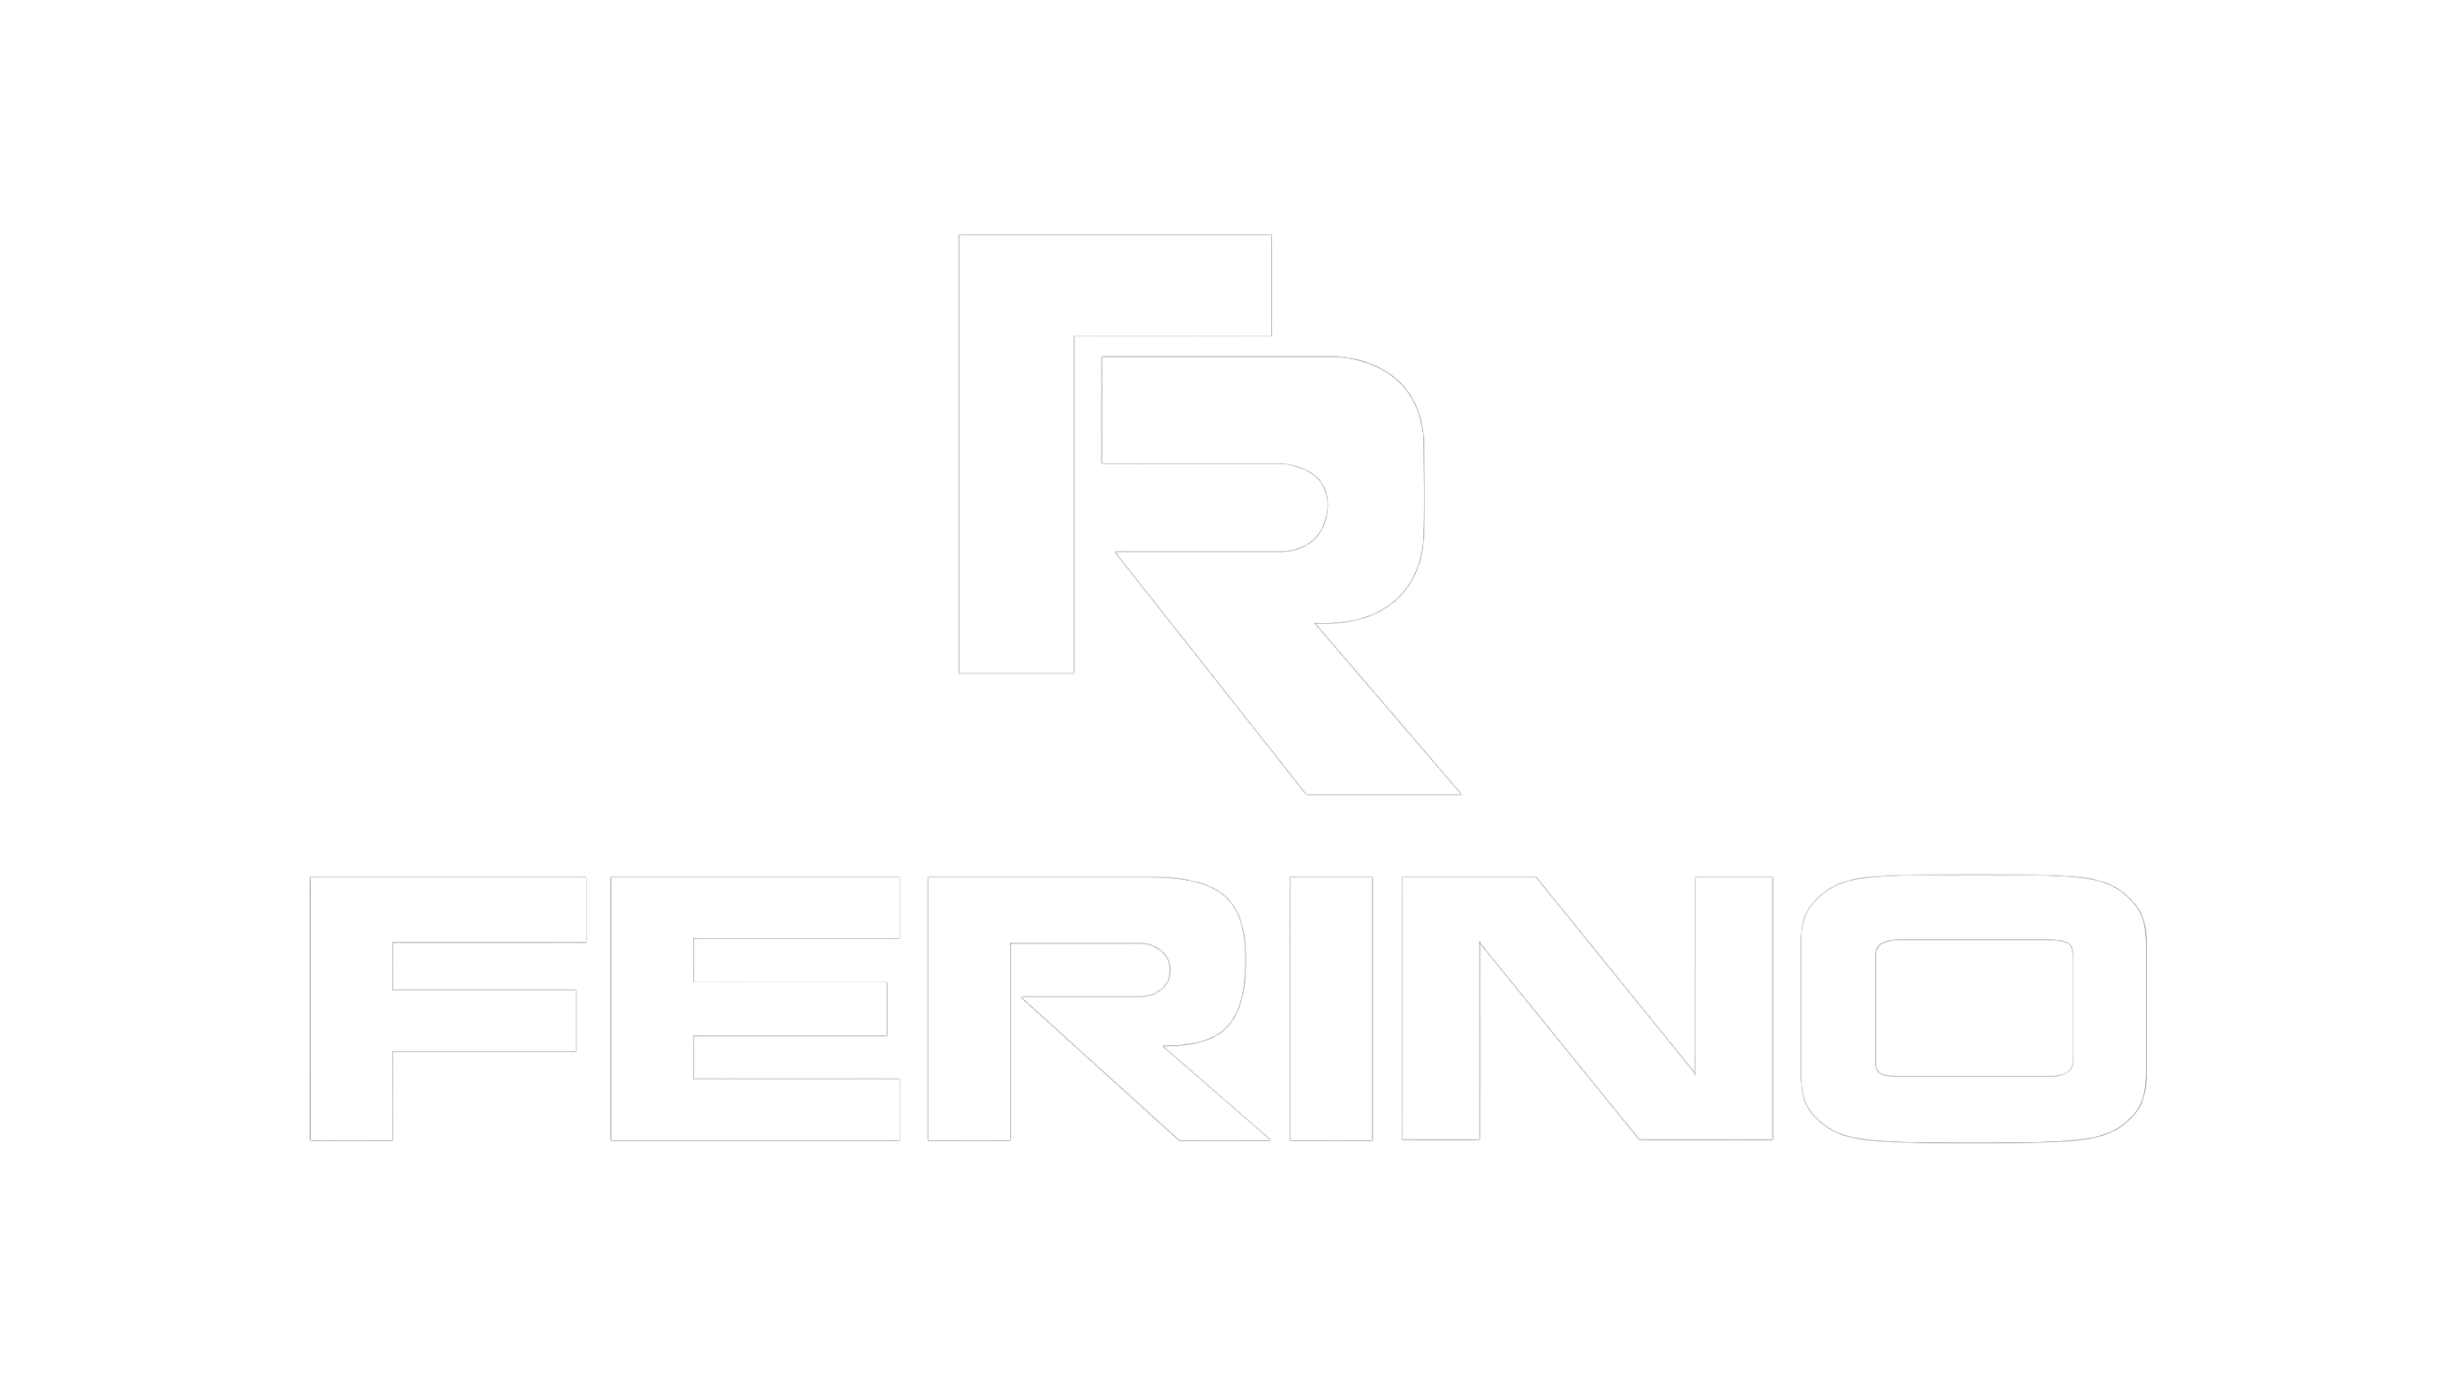 Ferino Group